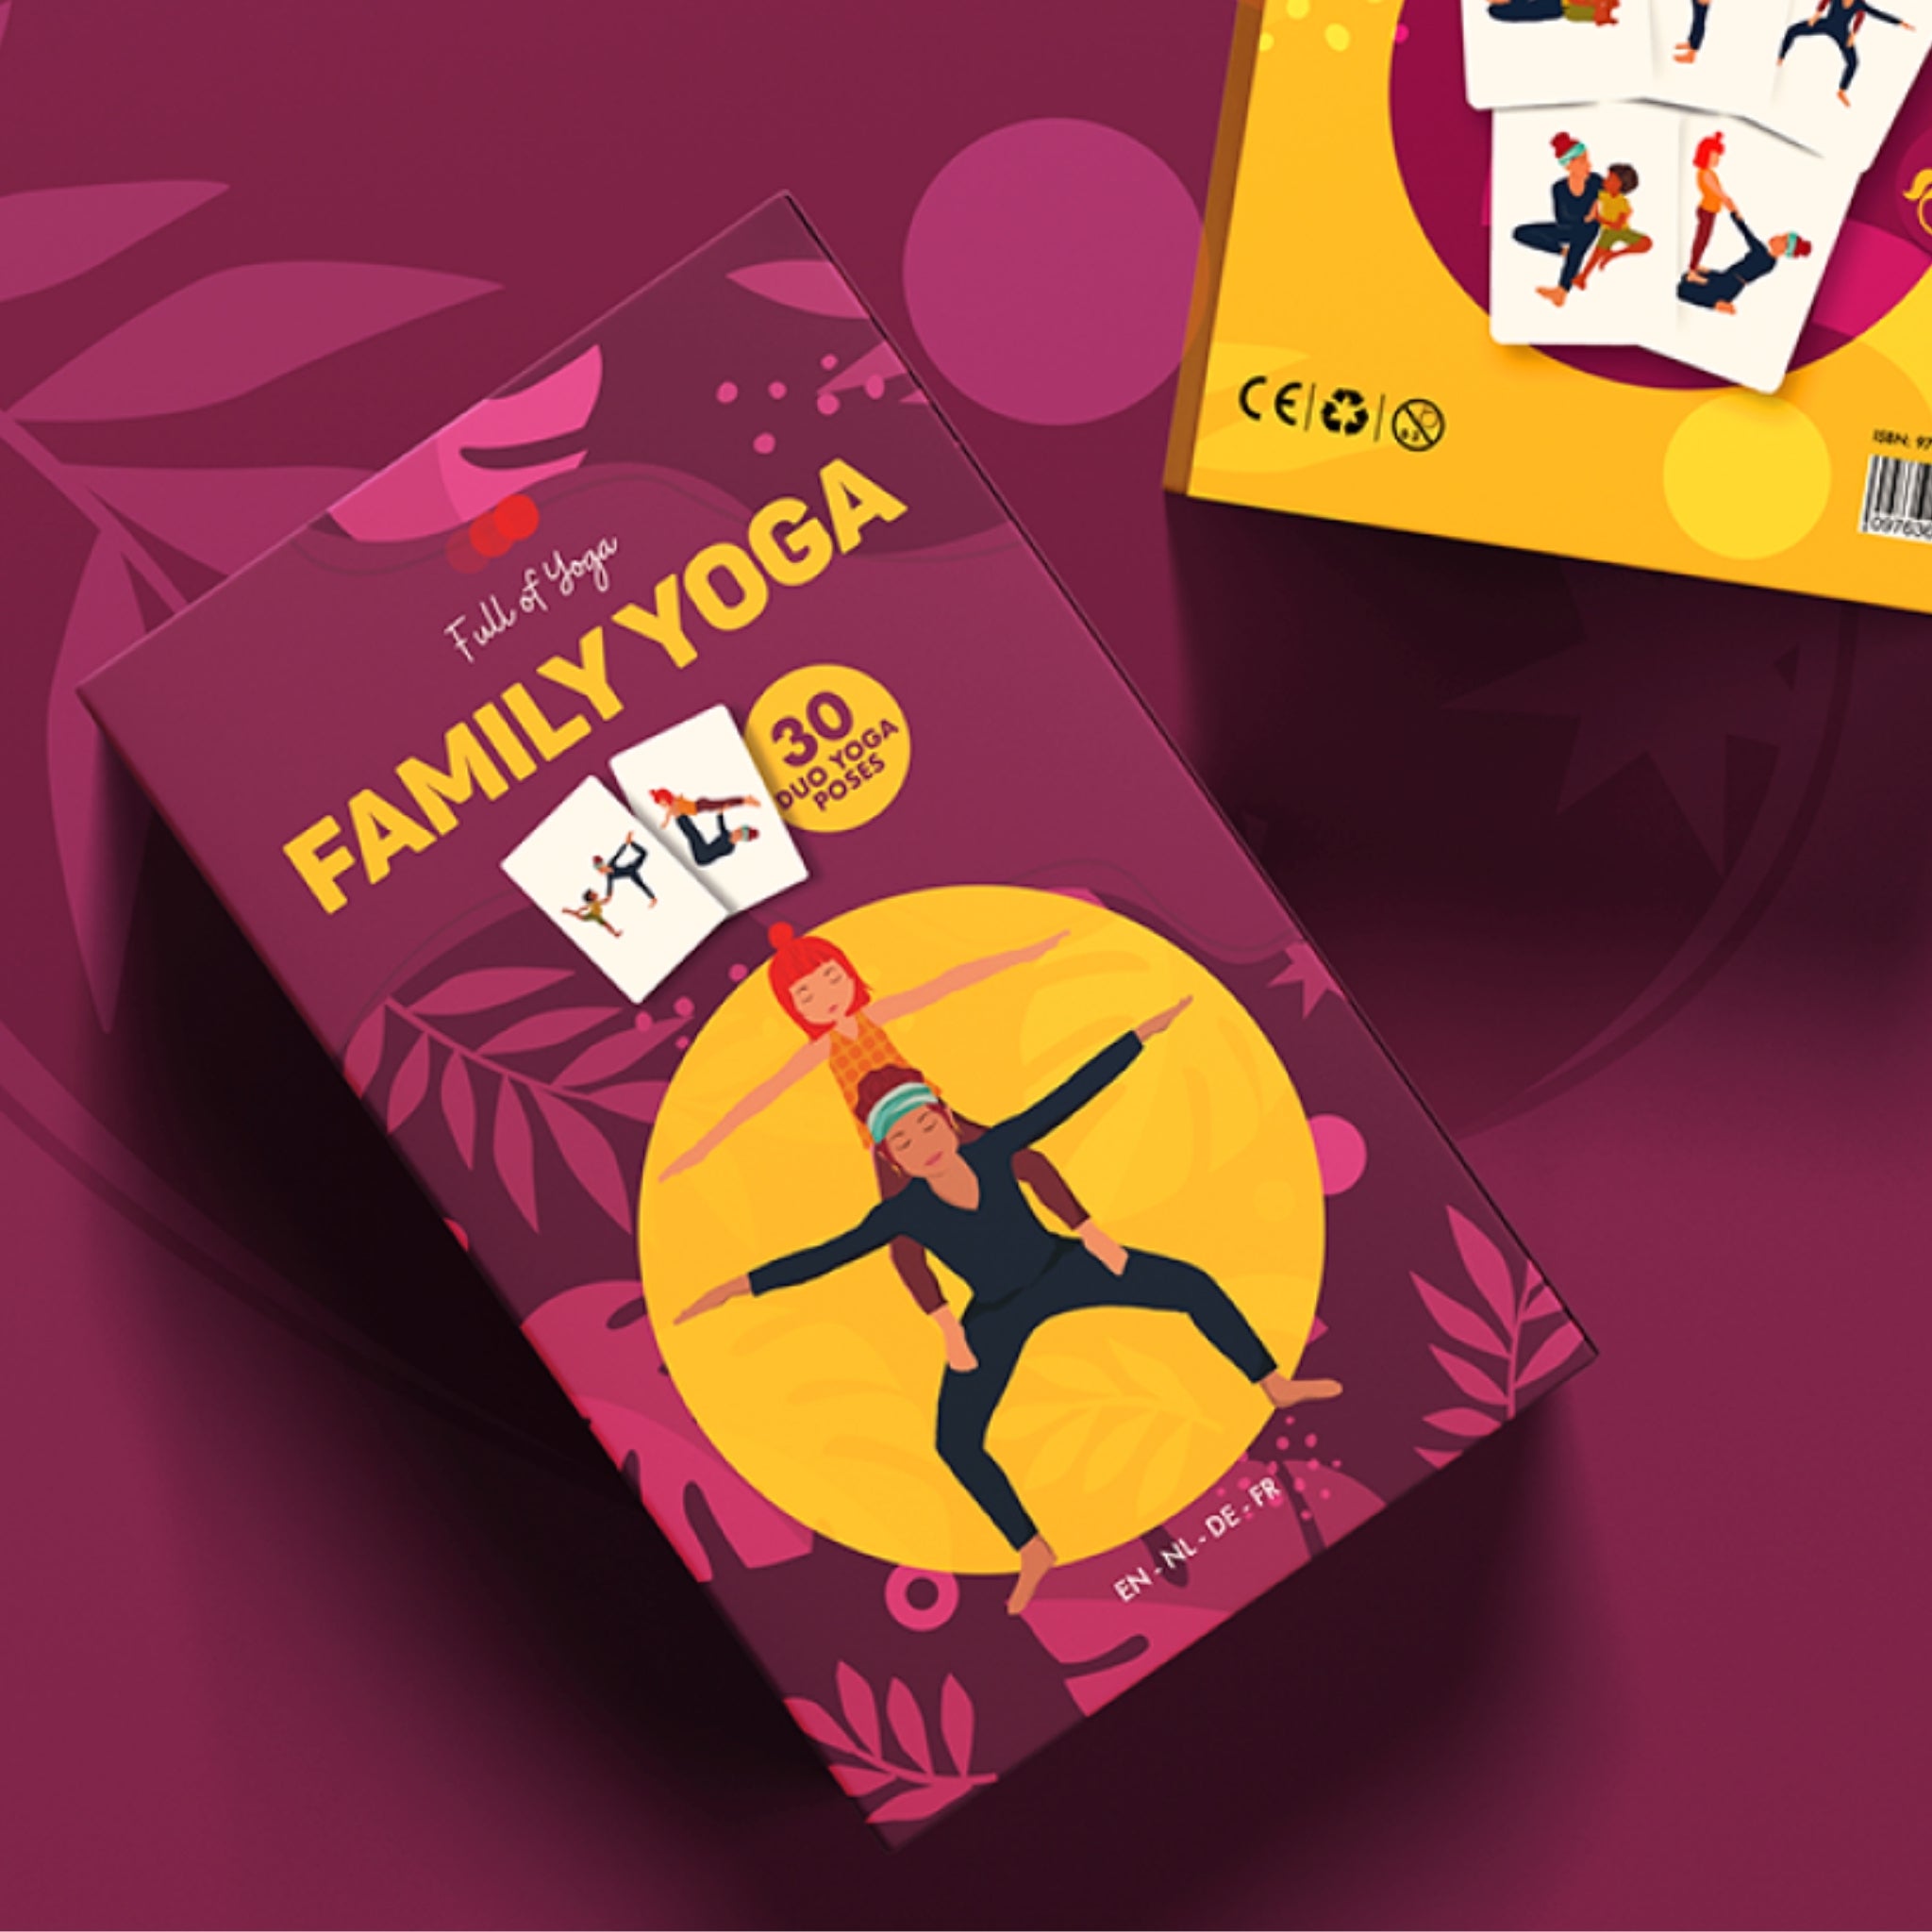 Gemeinsames Yoga-Kartenset - Familienyoga